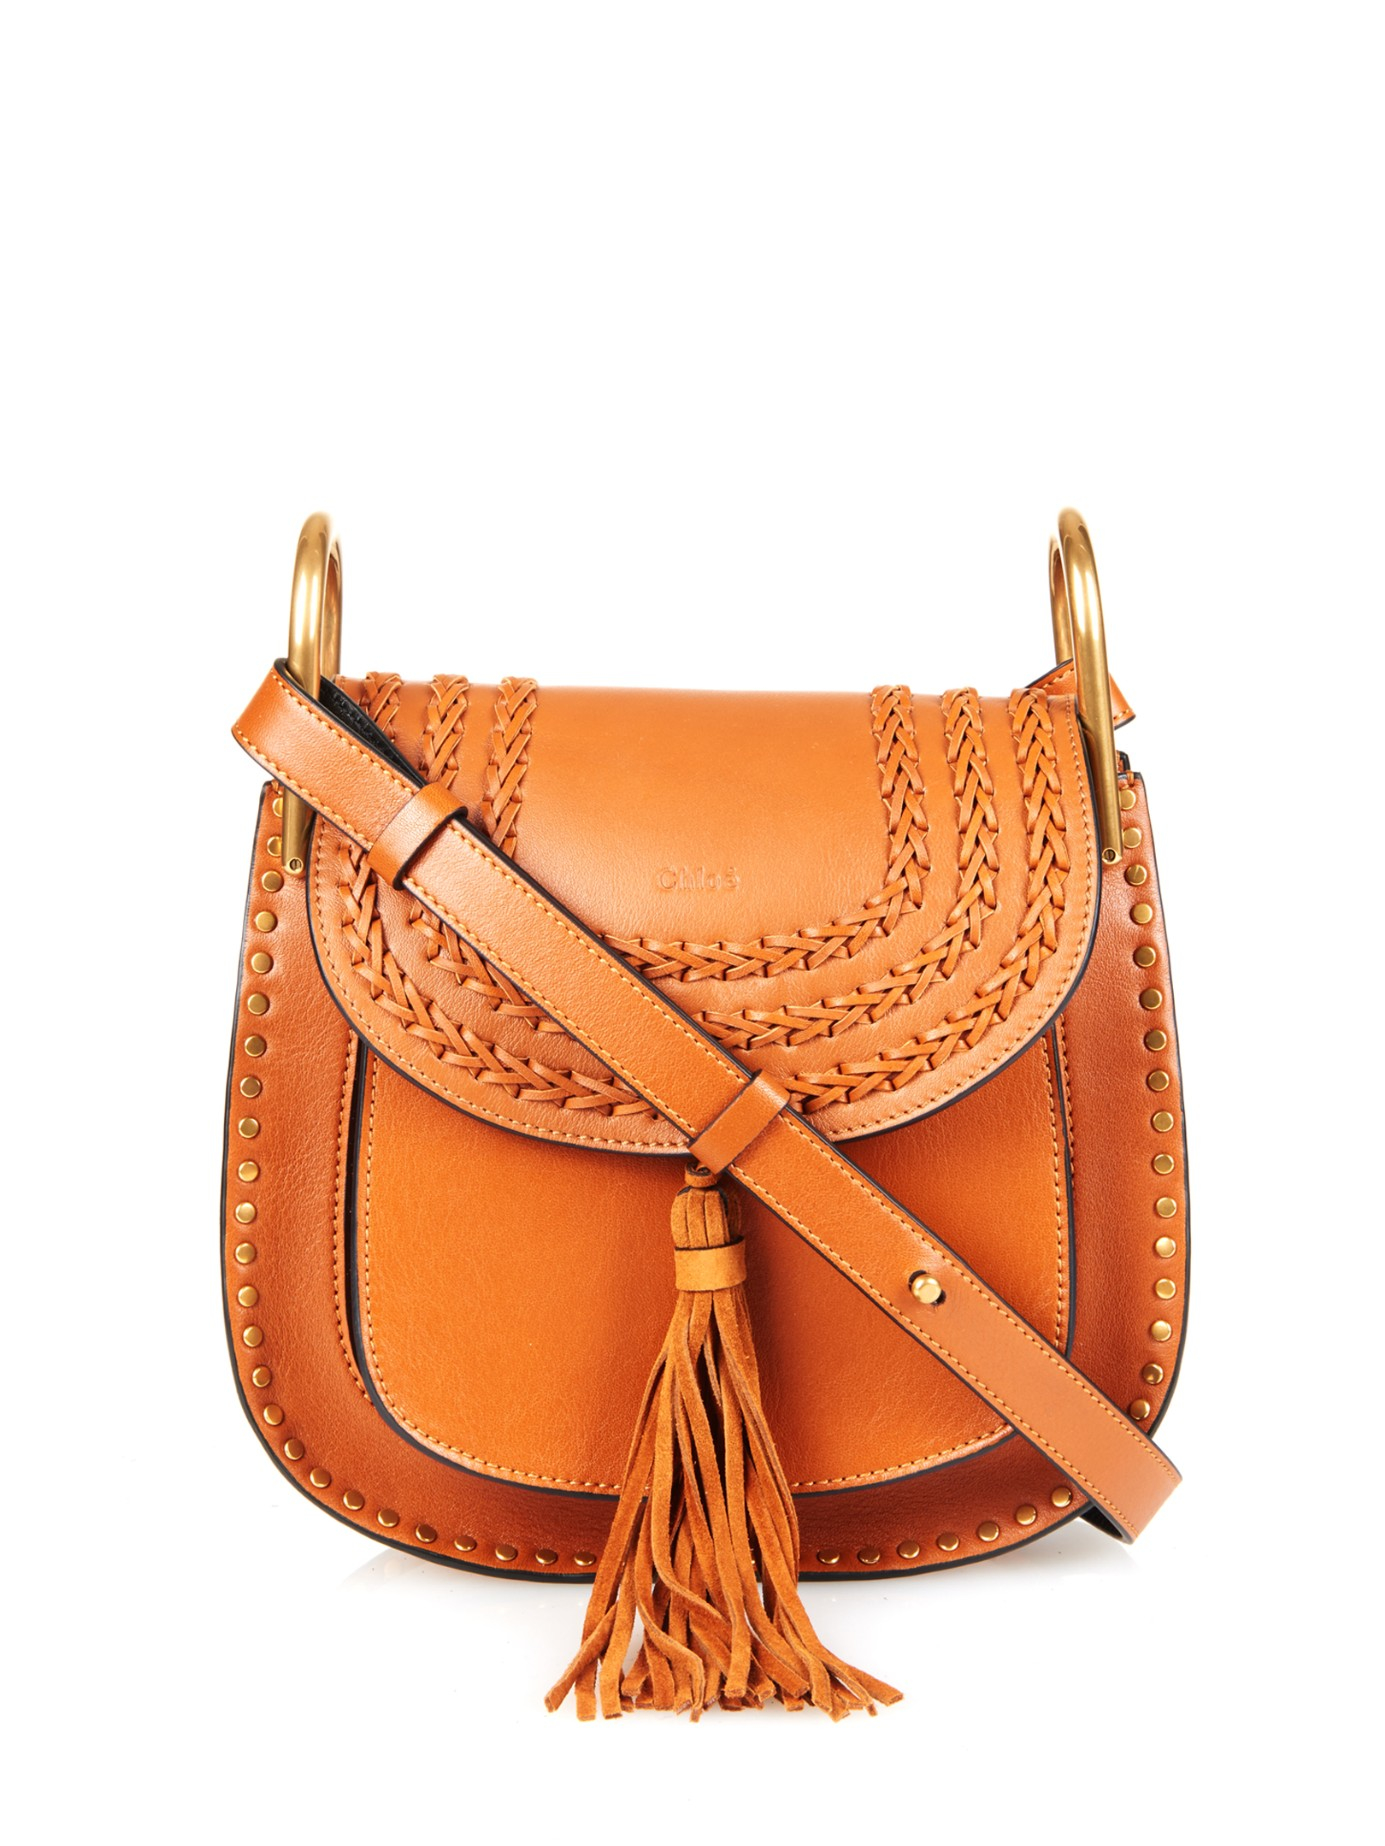 Chloé Hudson Small Leather Cross-Body Bag in Tan (Brown) - Lyst